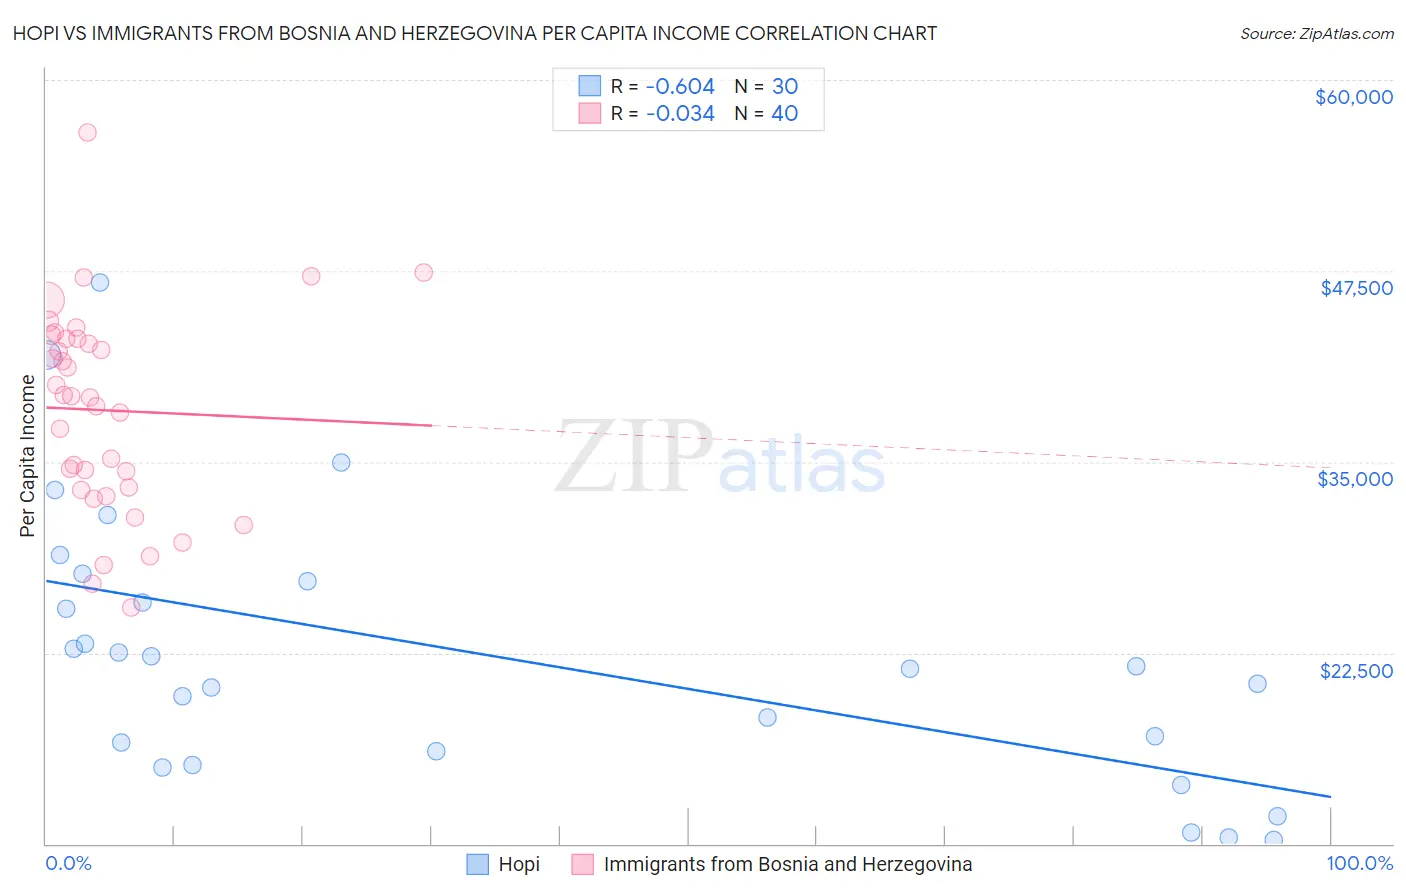 Hopi vs Immigrants from Bosnia and Herzegovina Per Capita Income